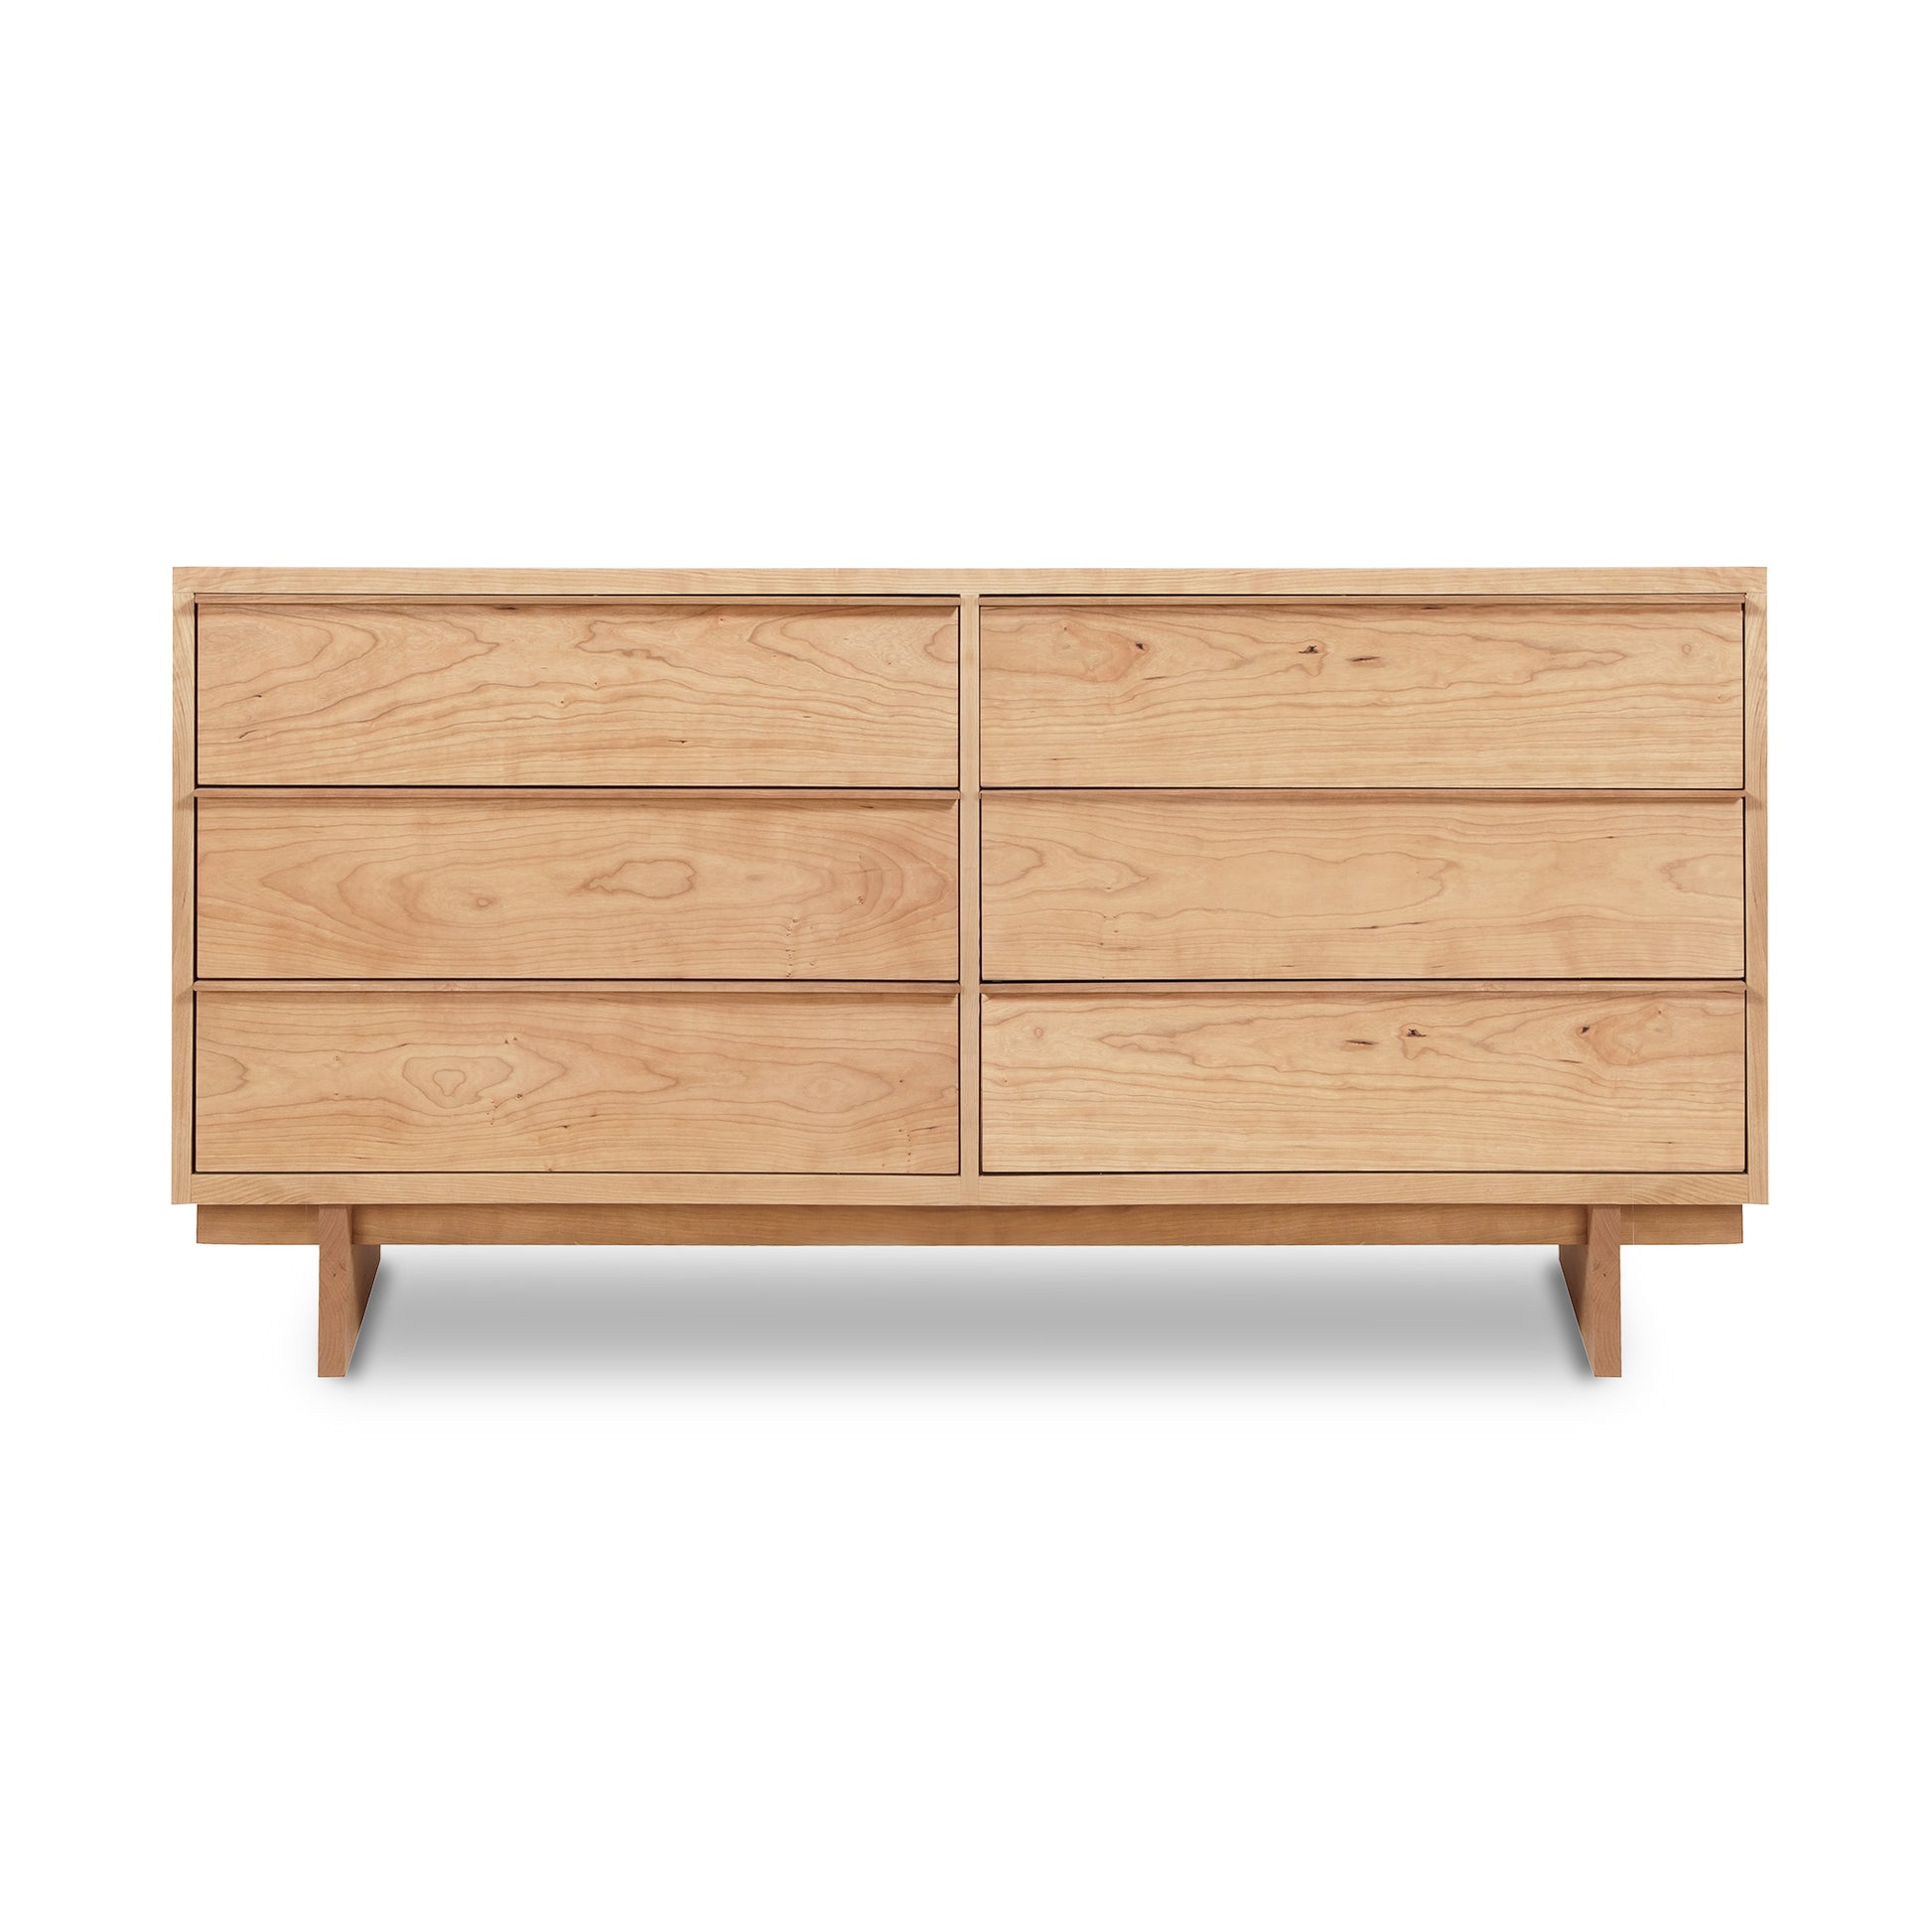 A modern natural cherry Vermont Furniture Designs Kipling 6-Drawer Dresser on a white background.